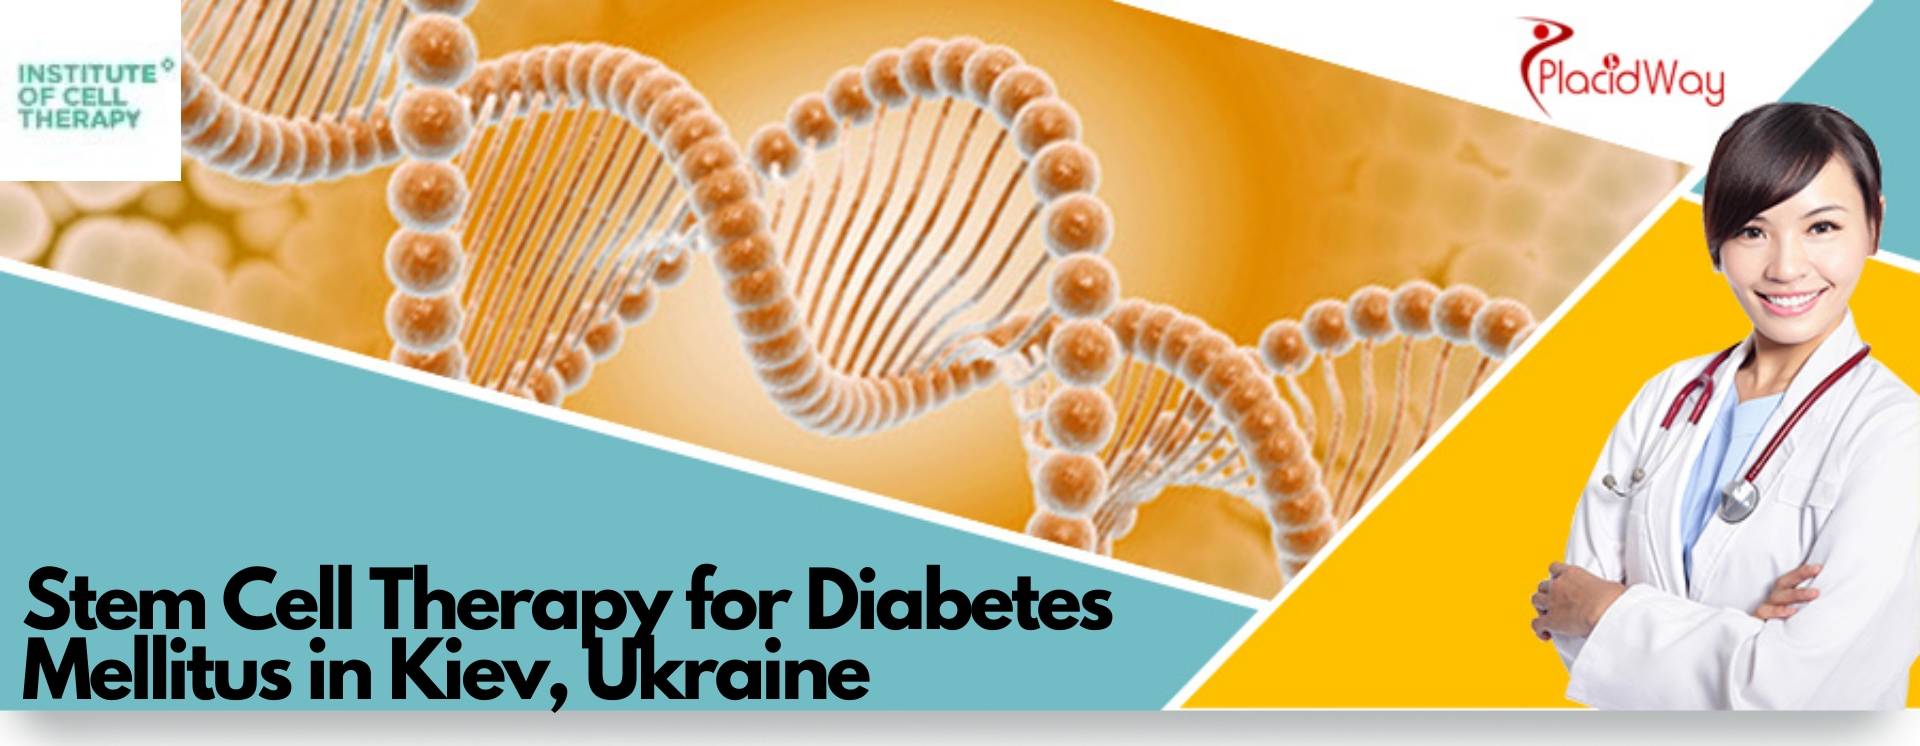 Stem Cell Therapy for Diabetes Mellitus in Kiev, Ukraine